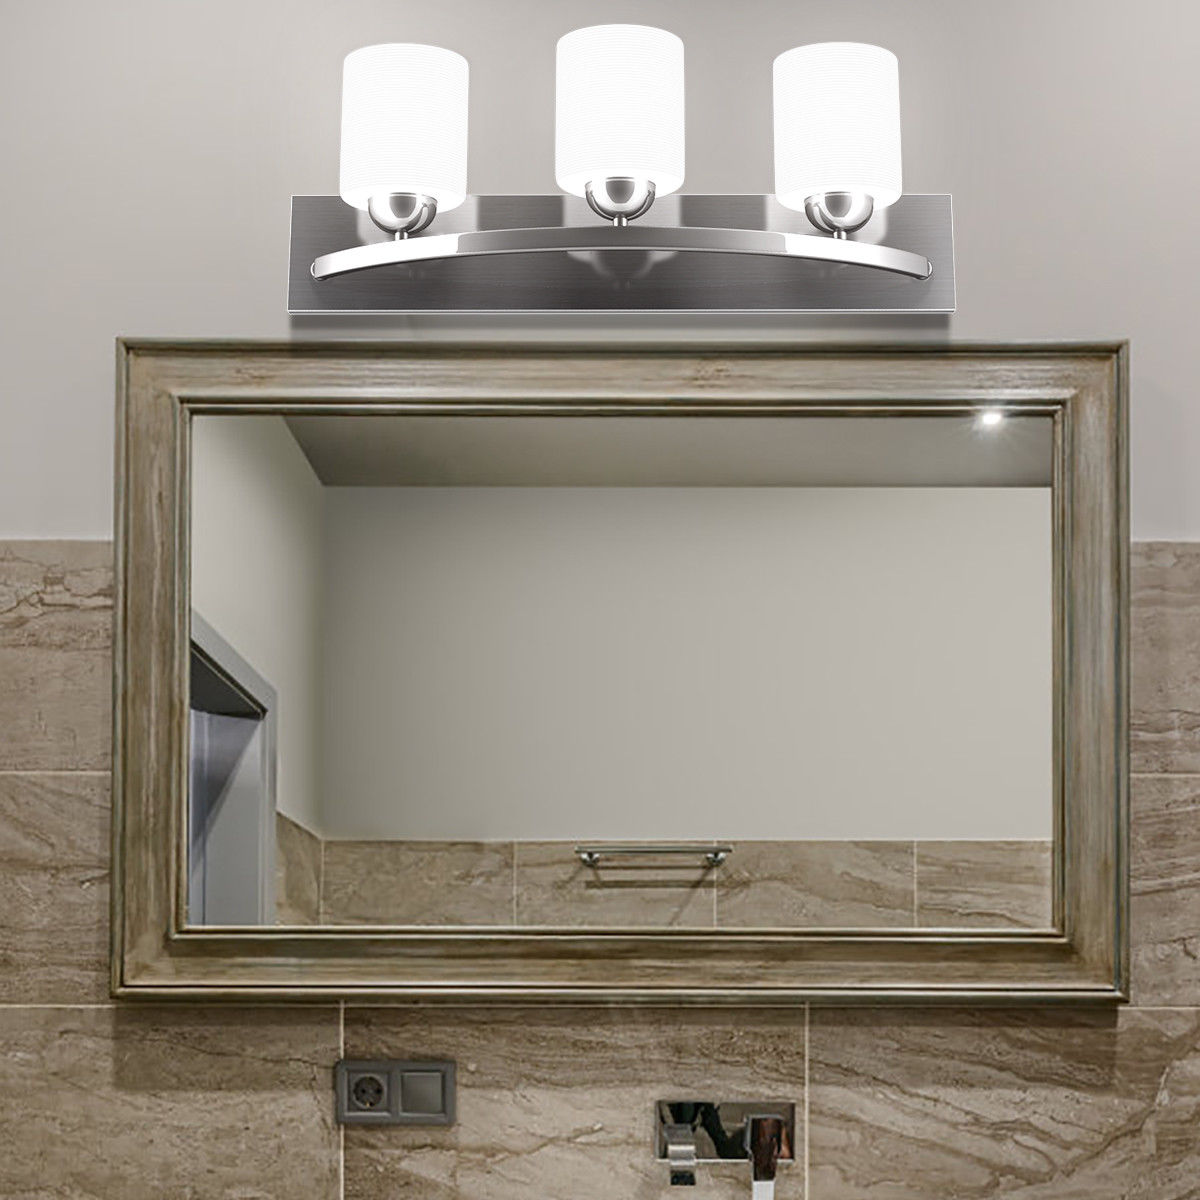 Costway 3 Light Glass Wall Sconce Modern Pendant Lampshade Fixture Vanity Metal Bathroom